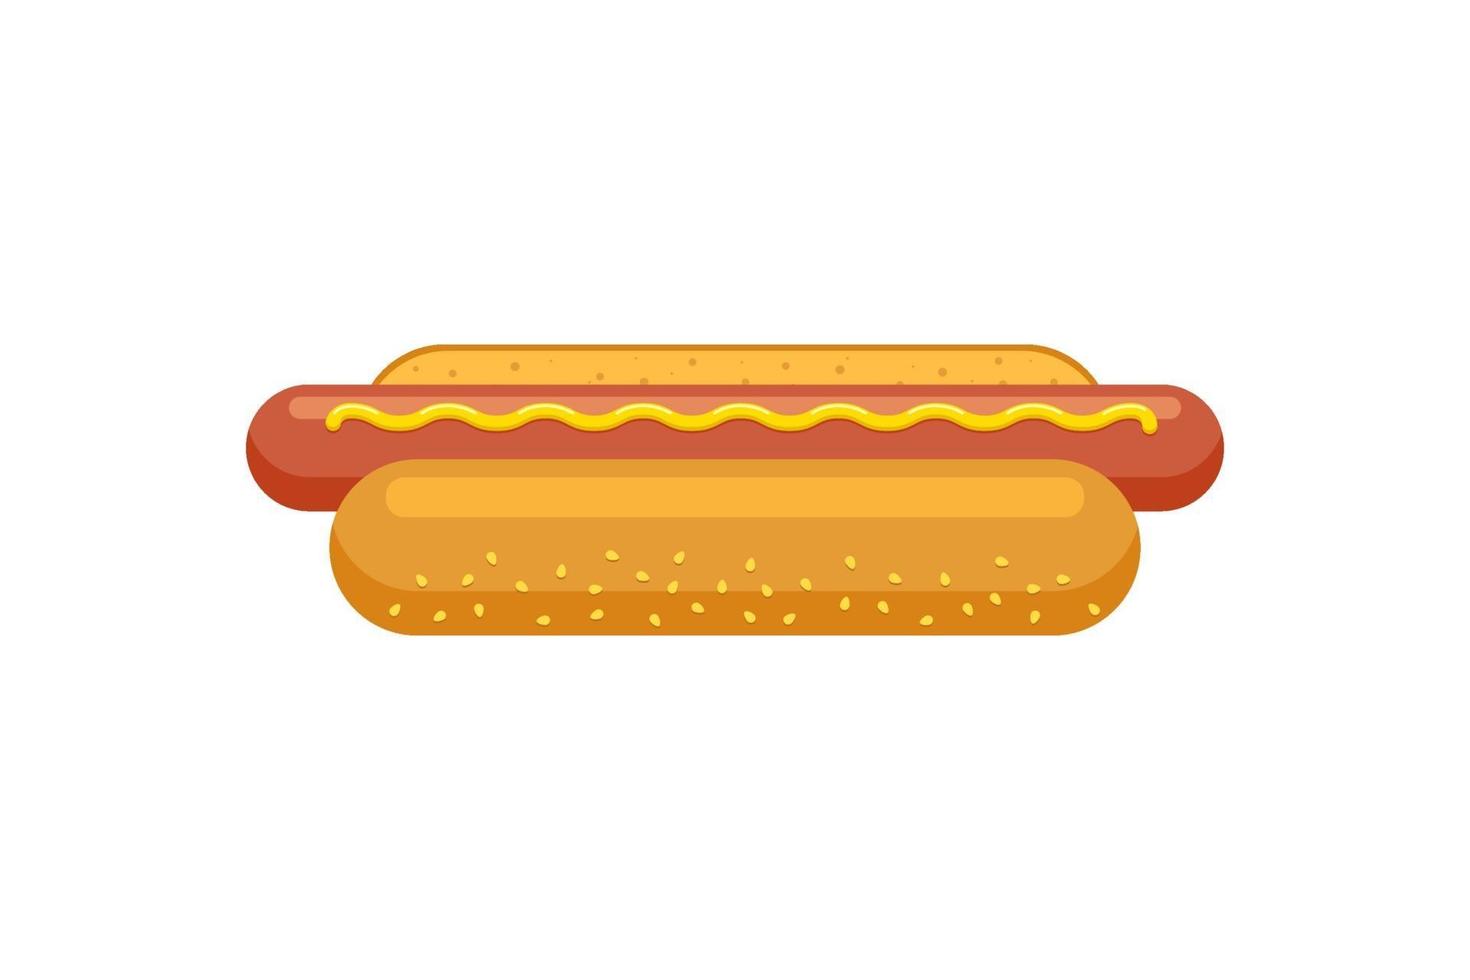 Cartoon fast food hotdog. Hot dog sausage in bread with mustard isolated flat vector illustration